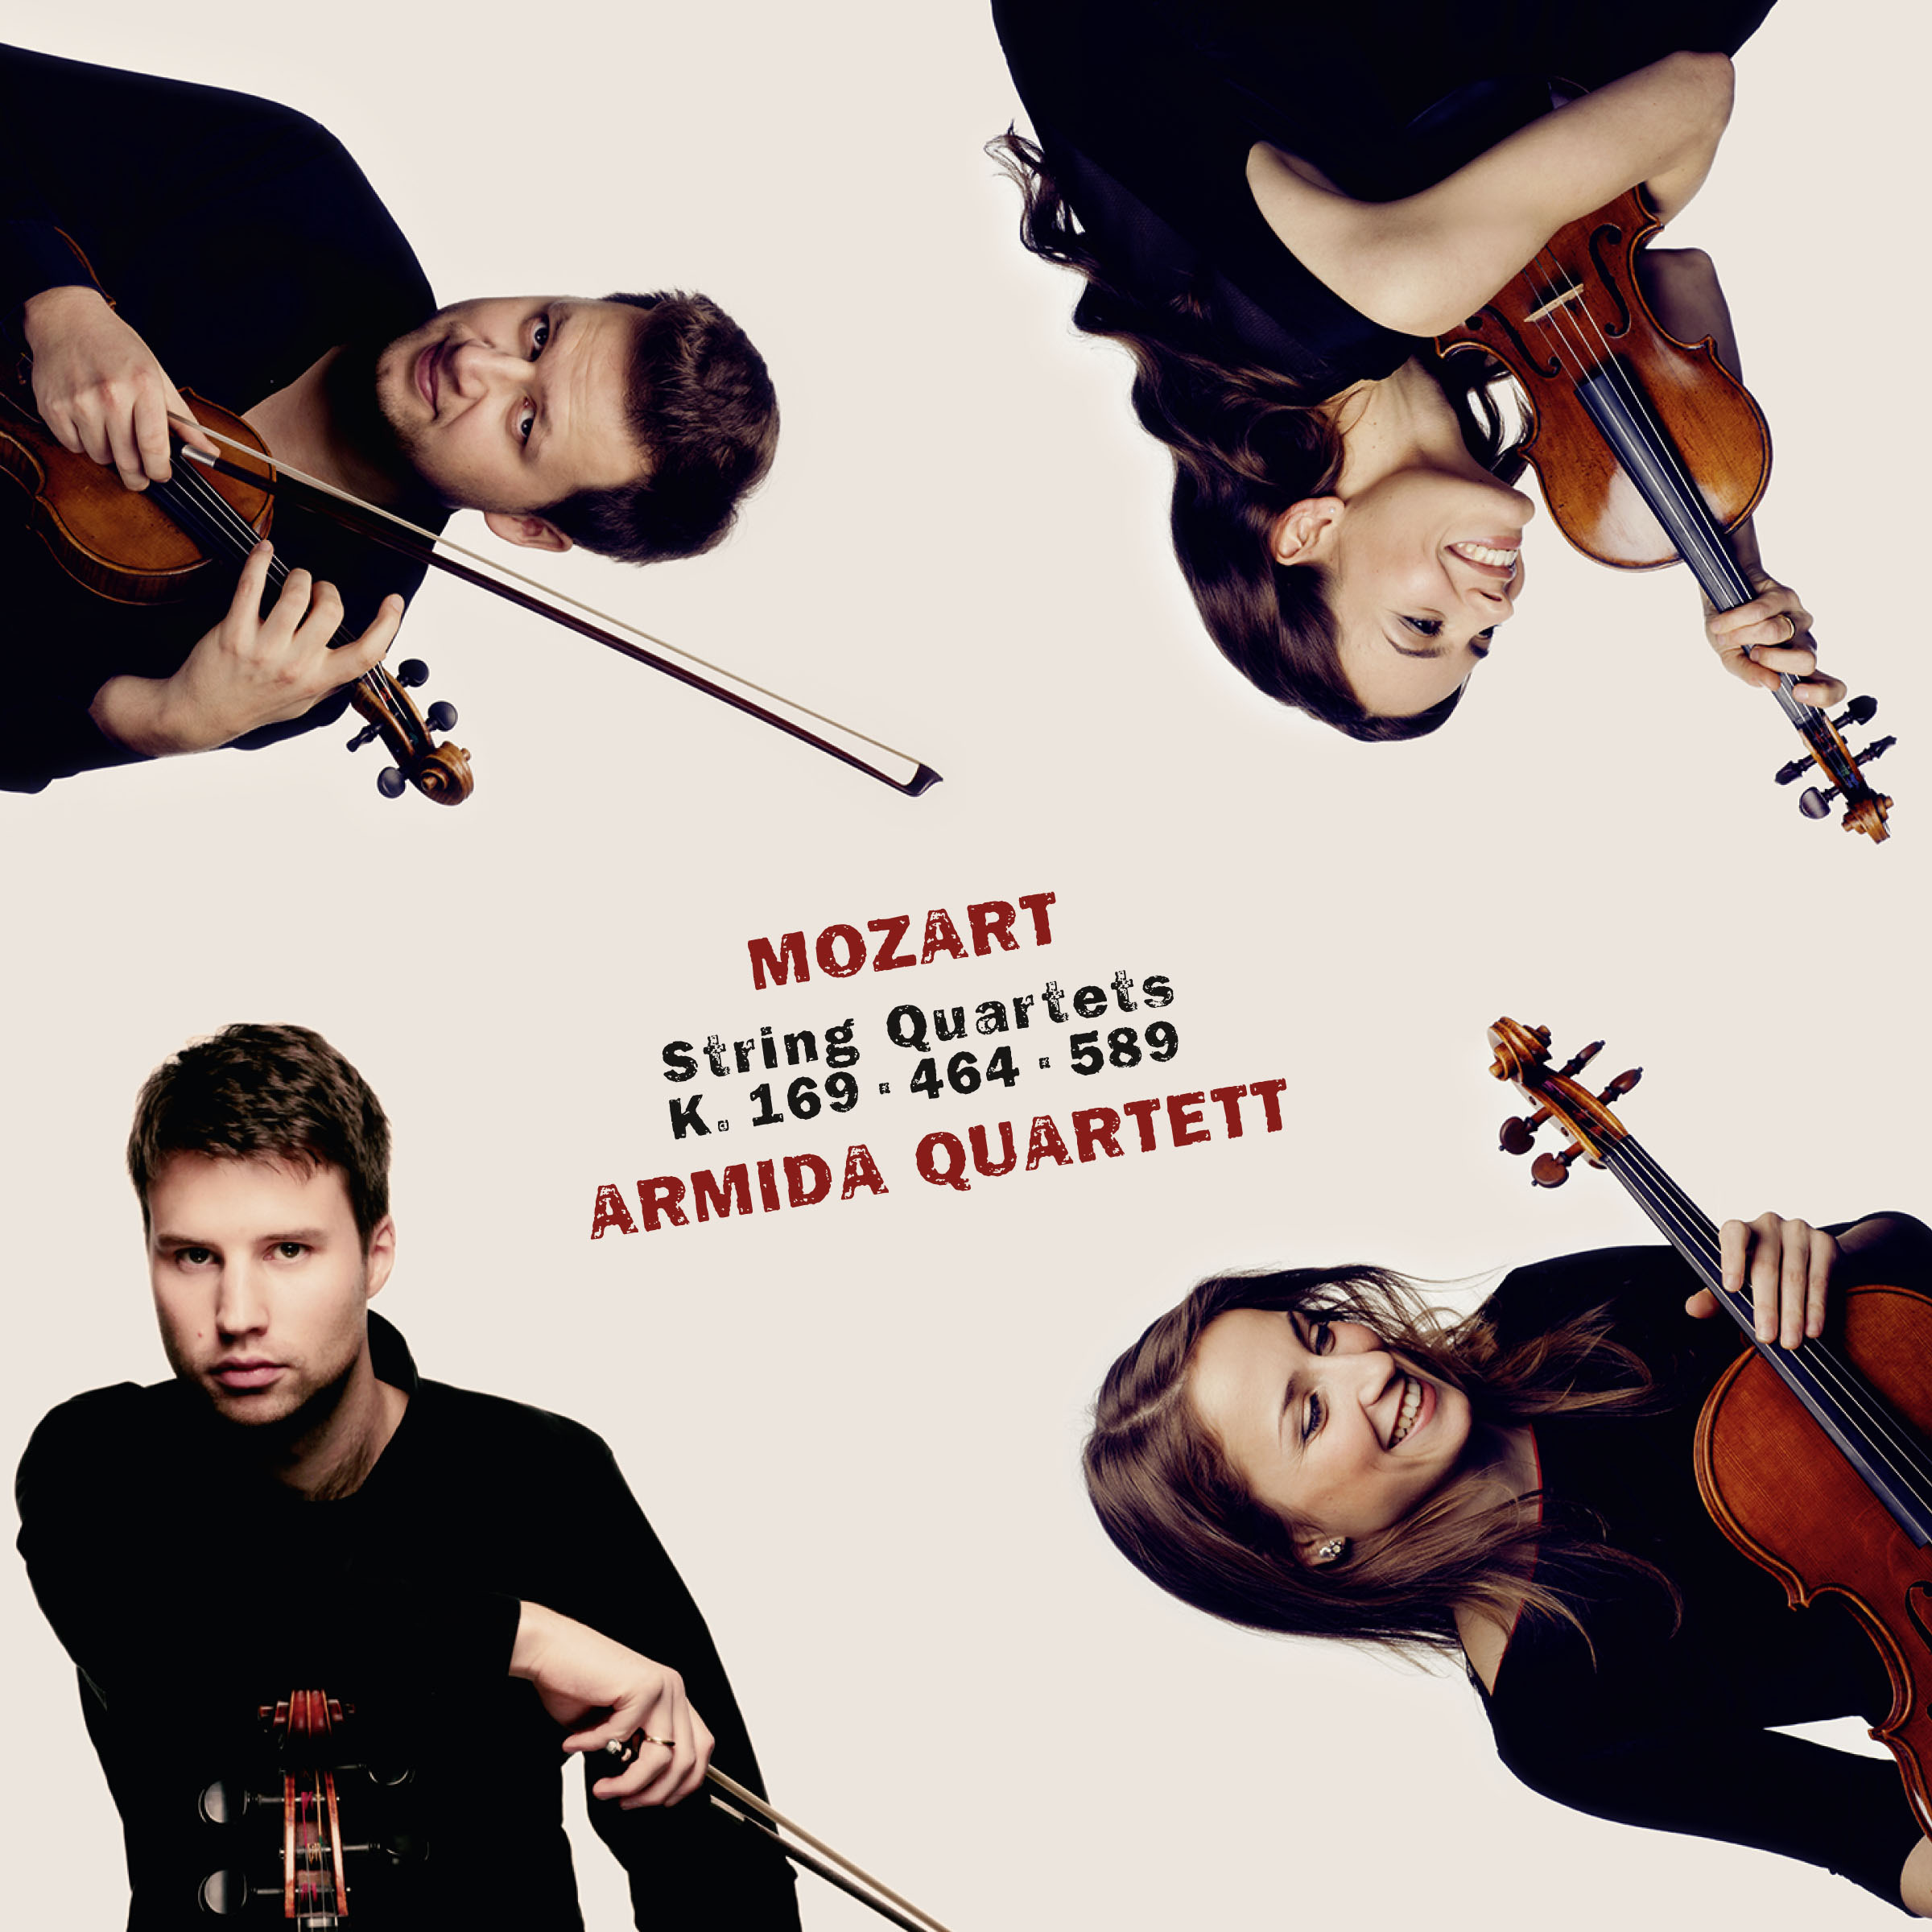 Armida Quartett - Mozart: String Quartets K. 169, K. 464 & K. 589 (2015) [Qobuz FLAC 24bit/96kHz]